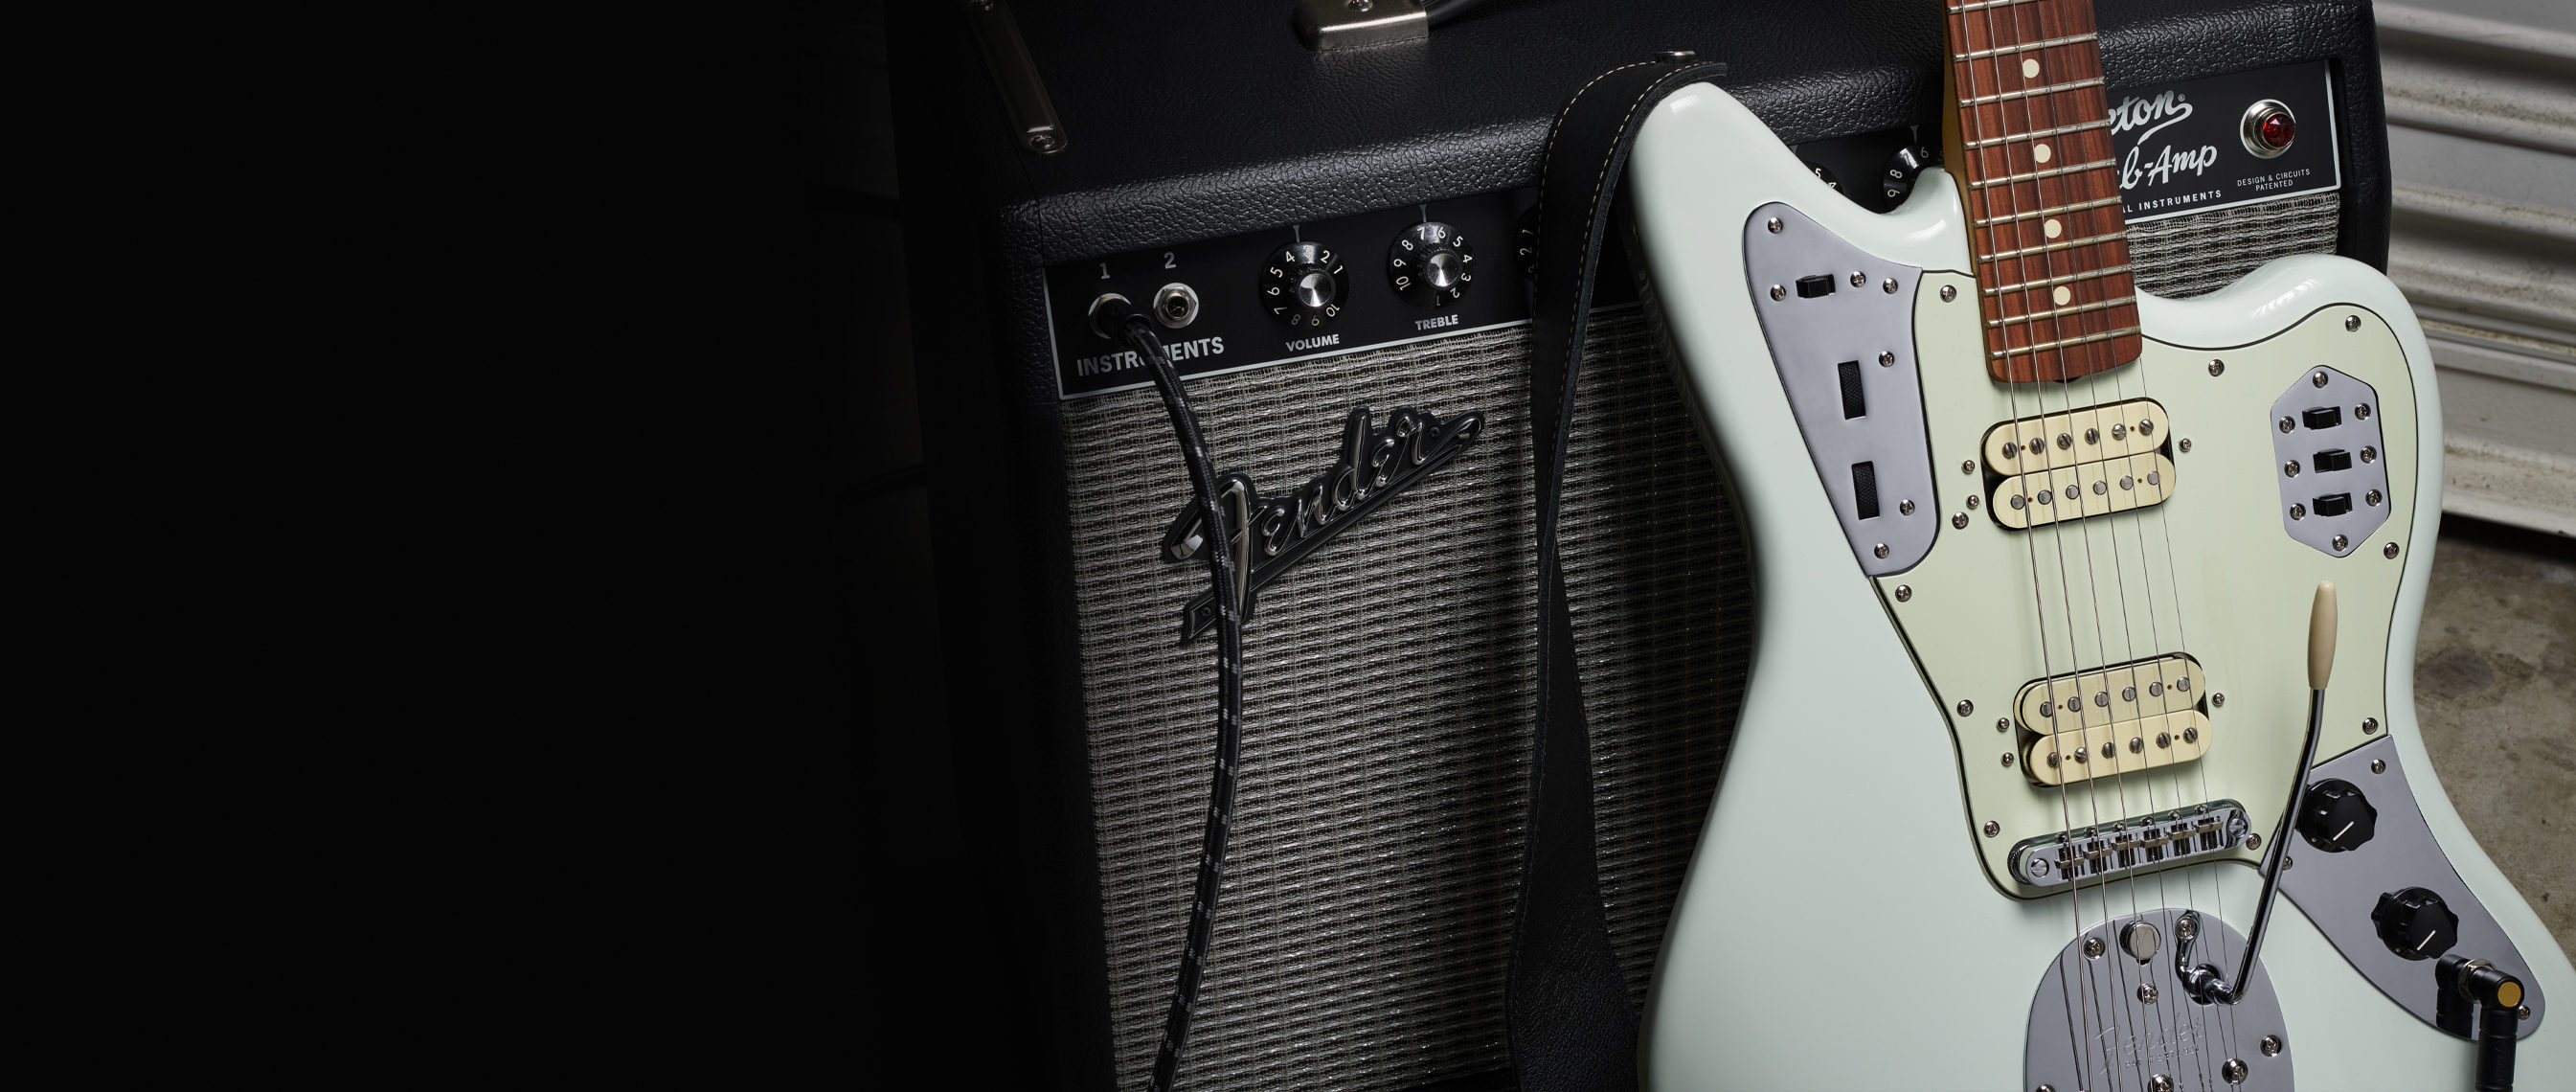 Fender Vintera 60's Jaguar Modified HH (MEX, PF) - sonic blue